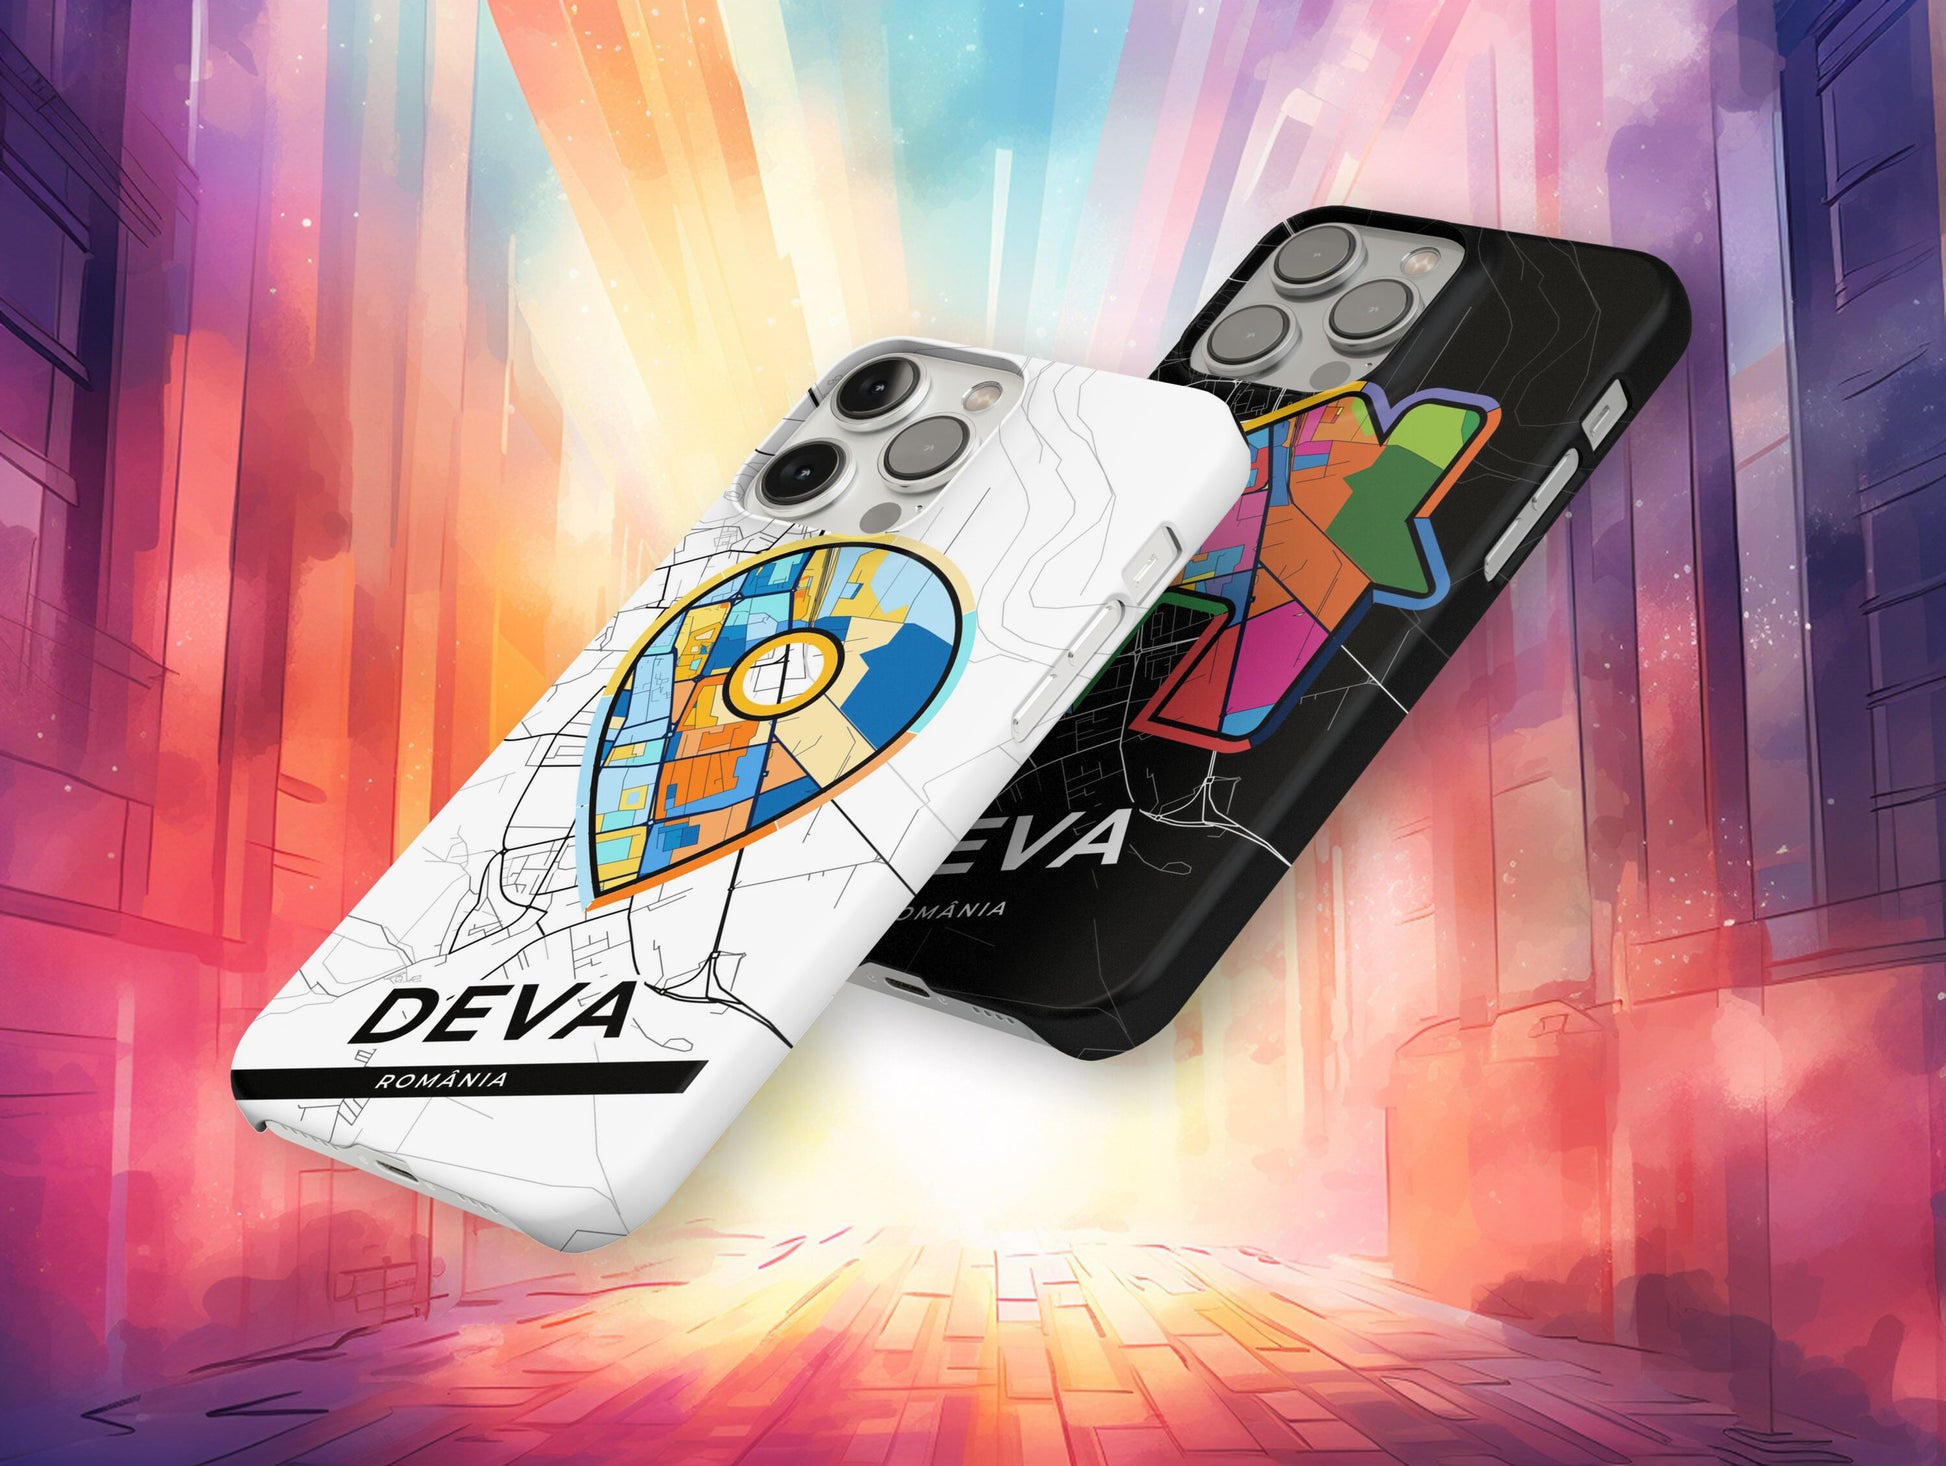 Deva Romania slim phone case with colorful icon. Birthday, wedding or housewarming gift. Couple match cases.